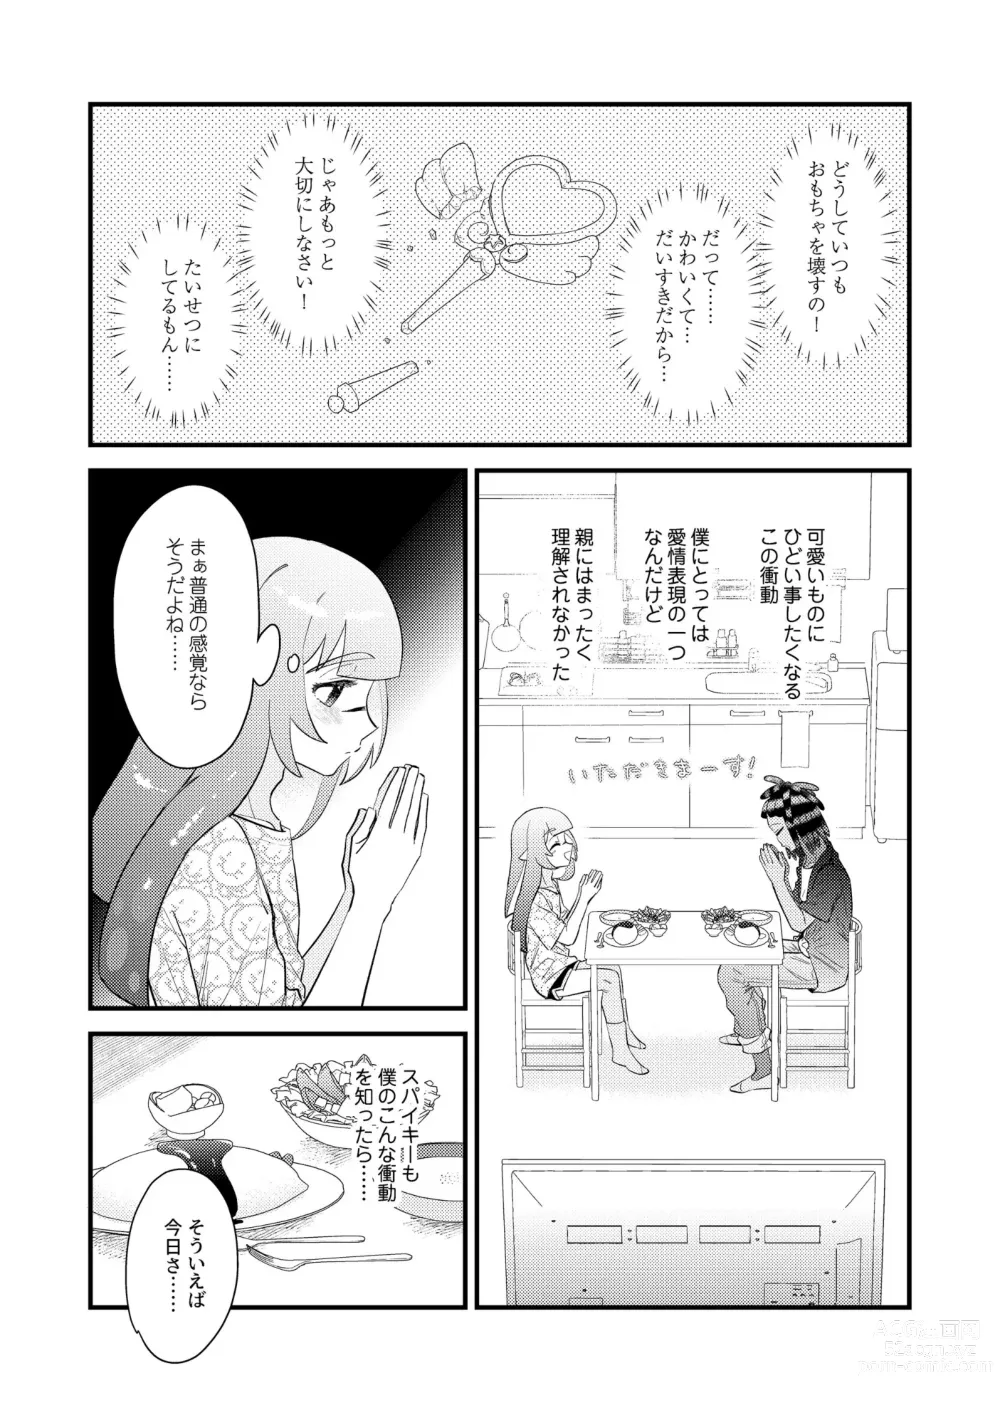 Page 6 of doujinshi Uketomete Hoshii no My Darling! - I want you to accept me my darling!